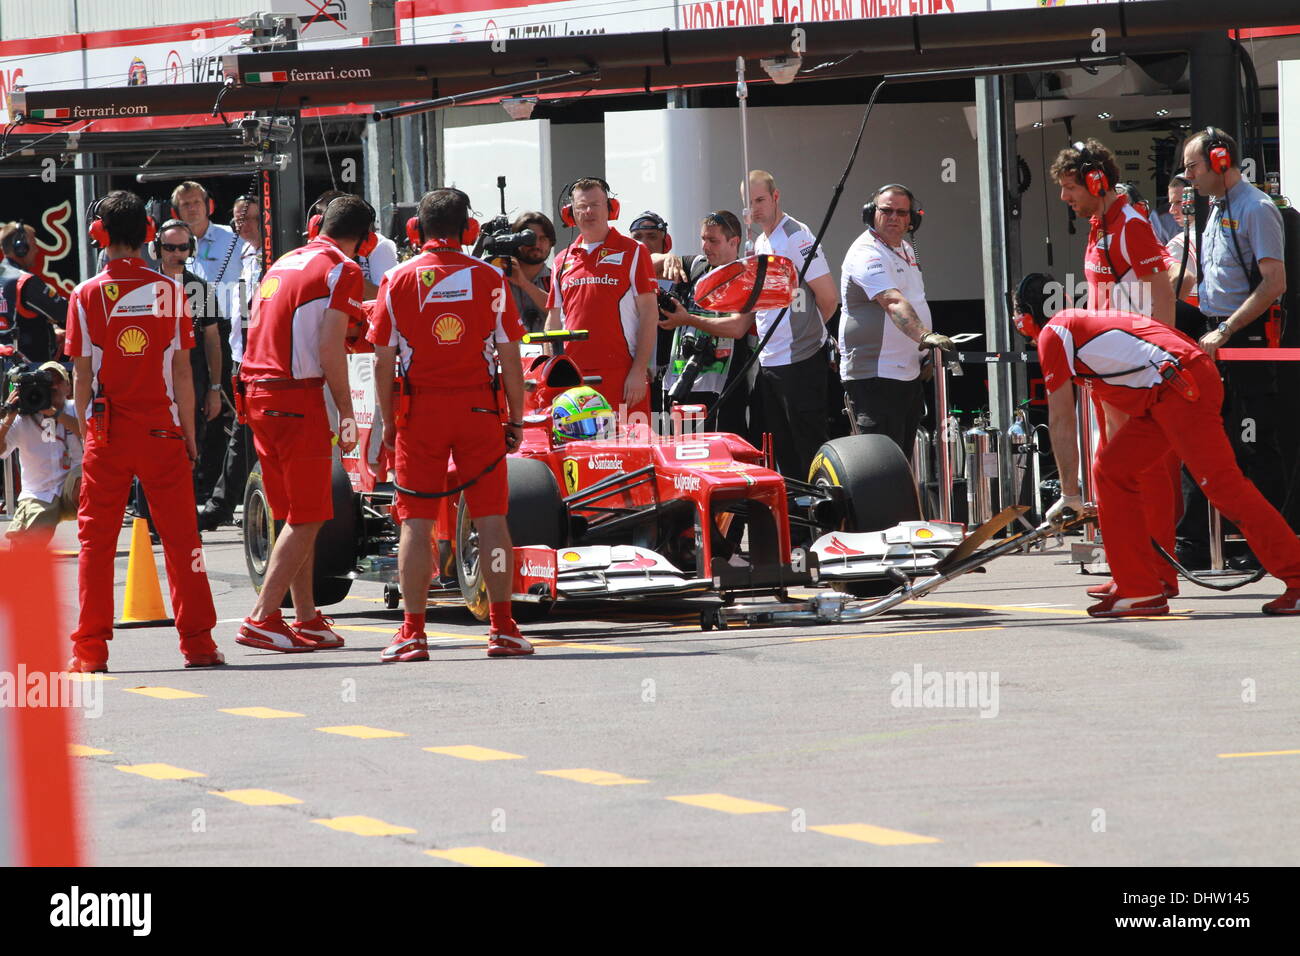 Felipe MASSA, Brazil, Team FERRARI F1 - Formula One Grand Prix - Monaco - Practice Monaco - 24.05.12 Stock Photo